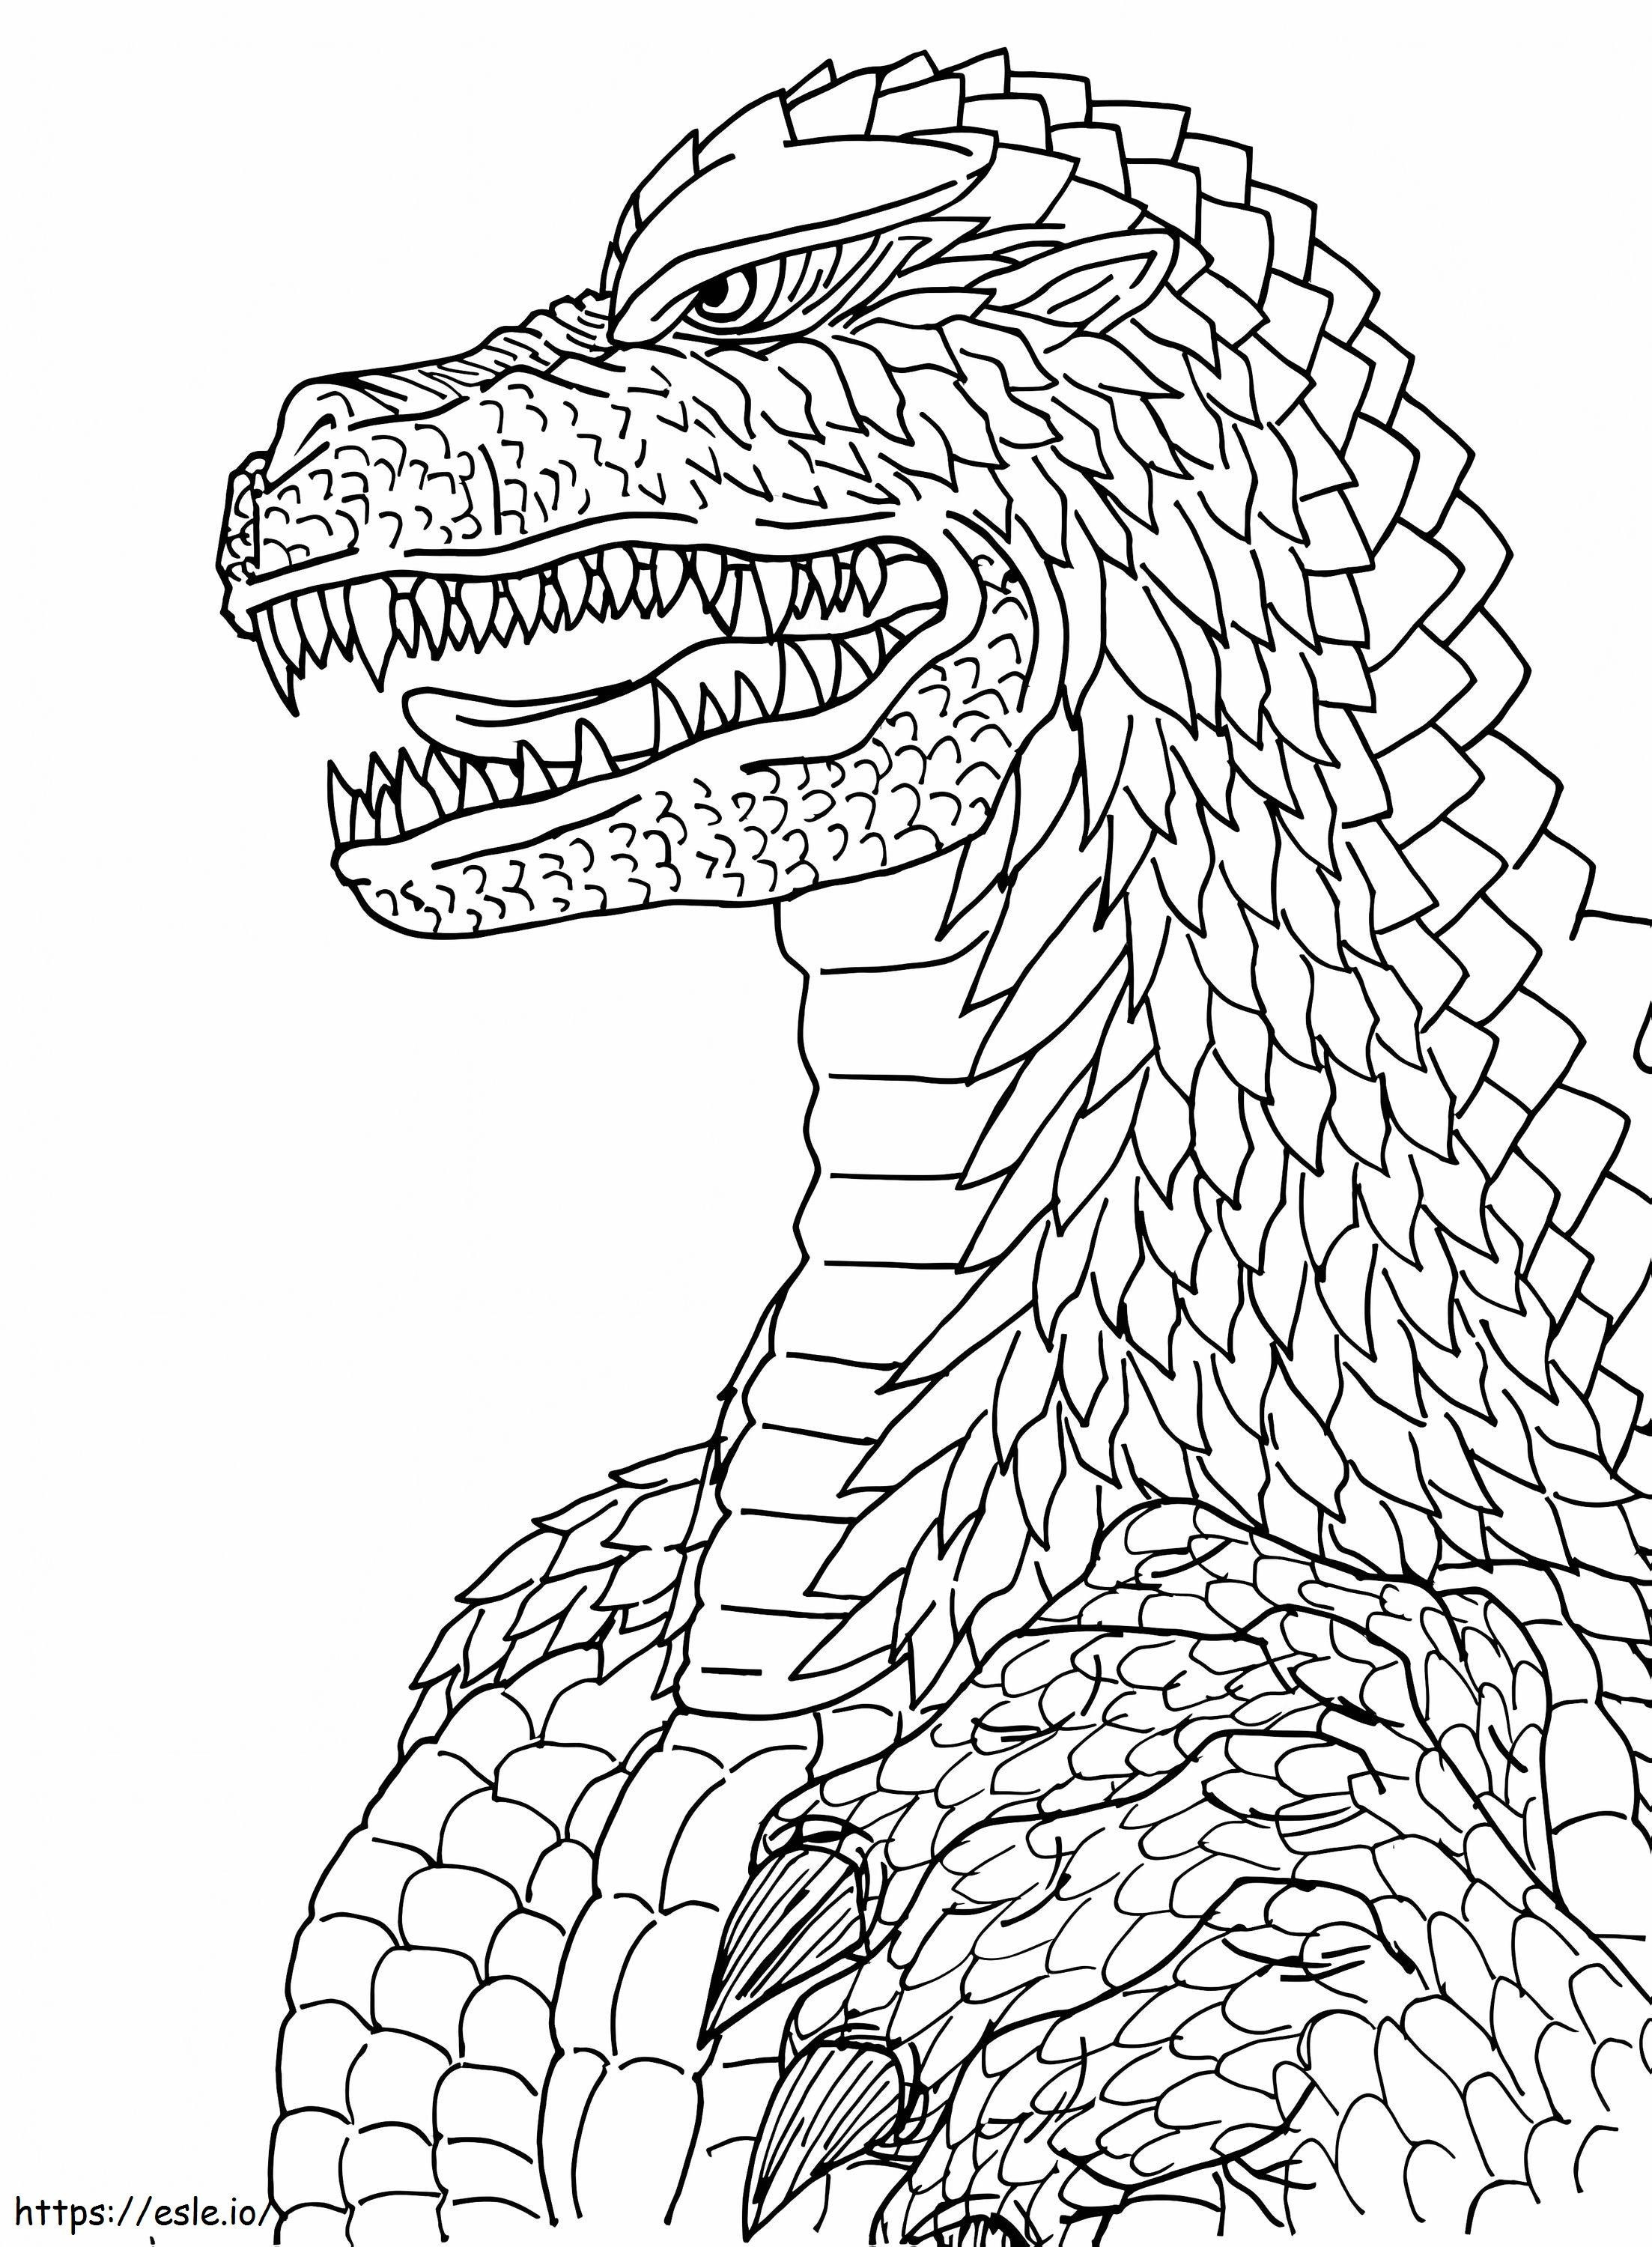 Godzilla-Kopf ausmalbilder